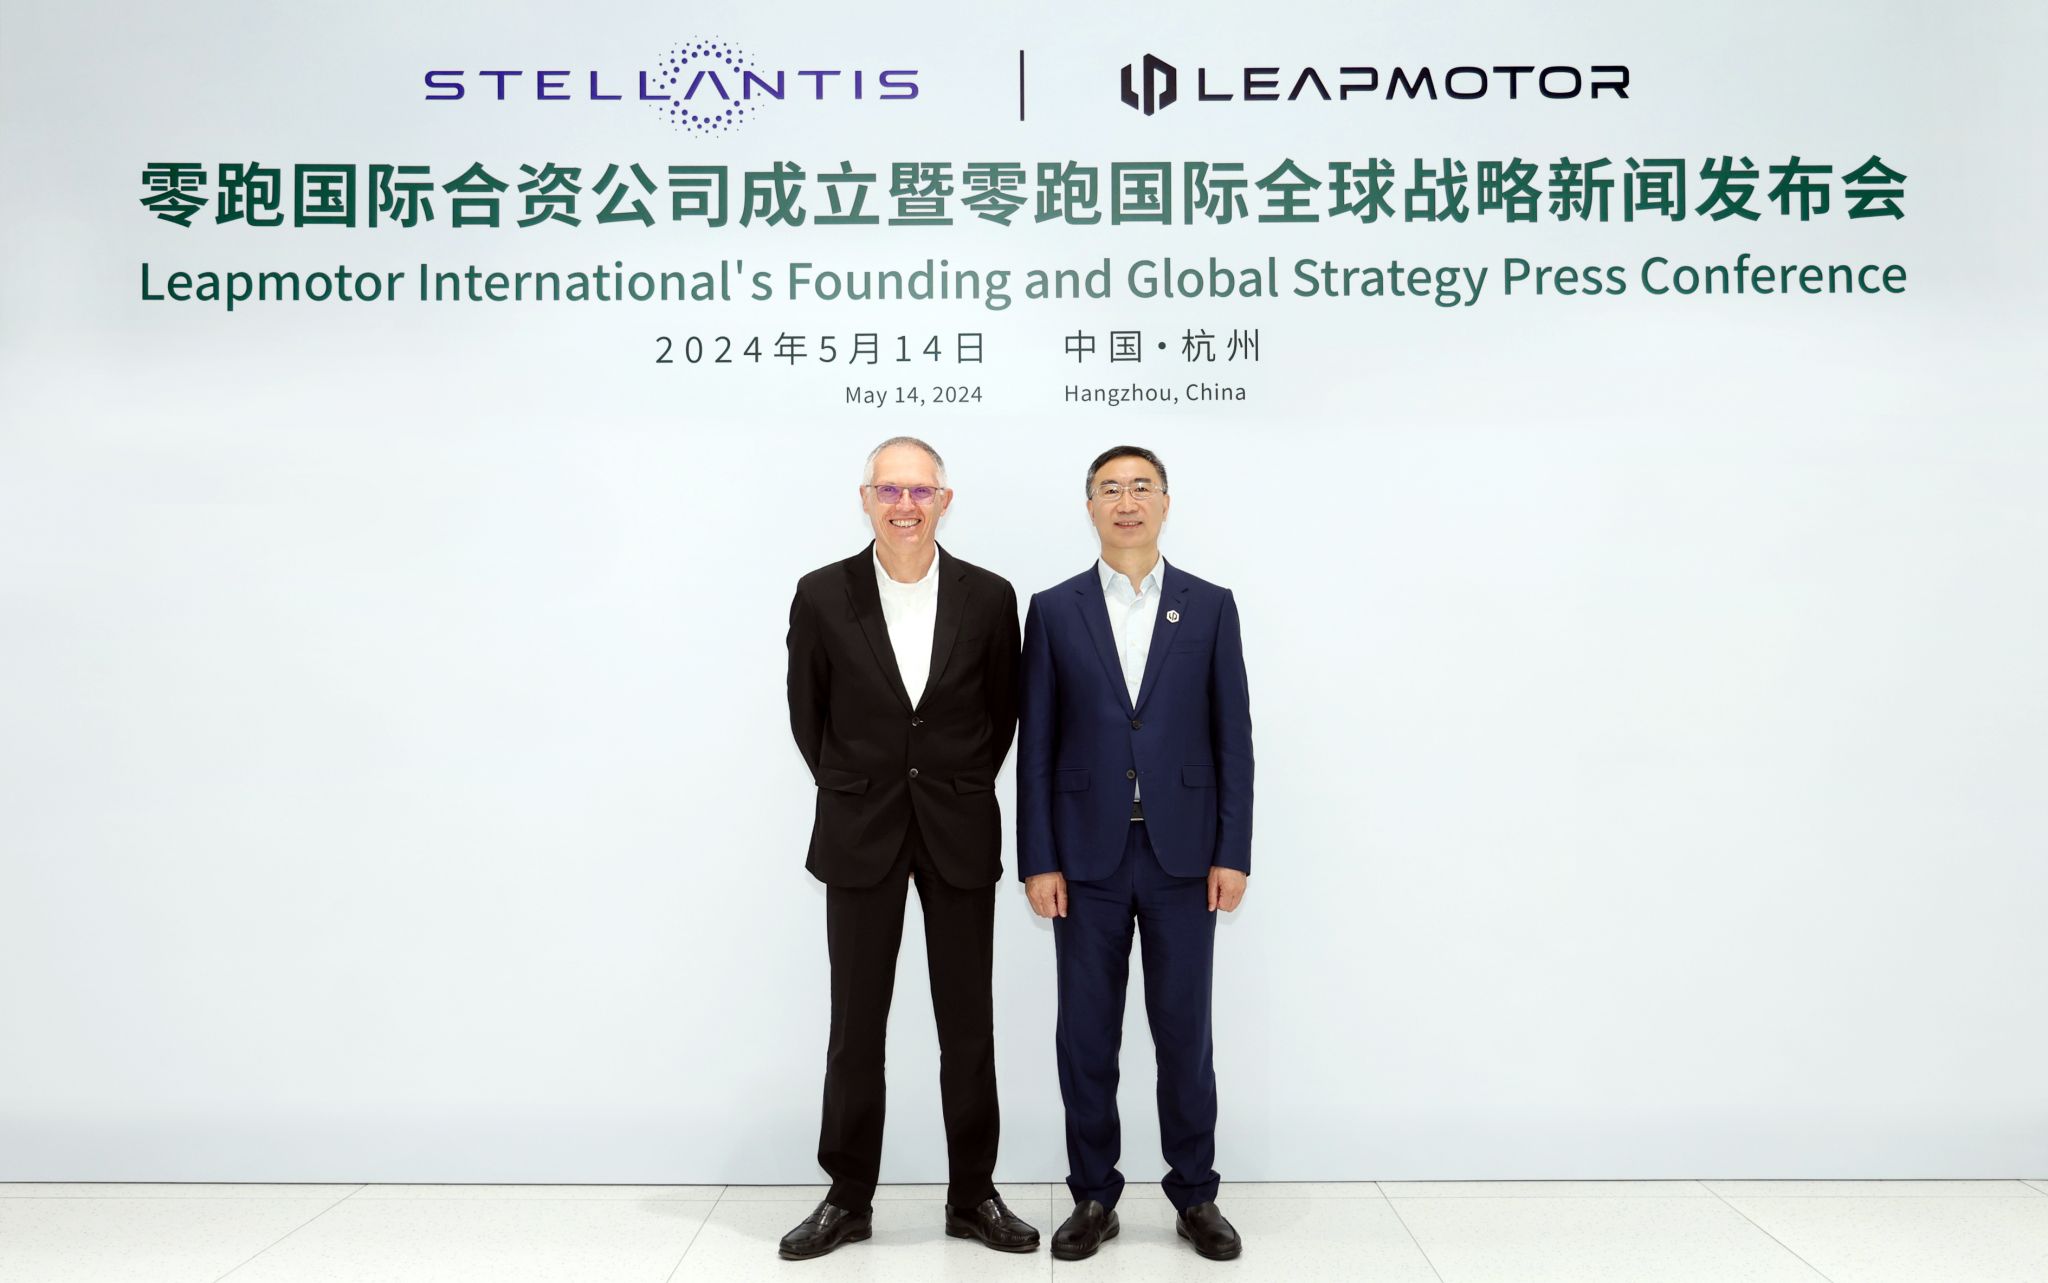 hero stellantis ceo carlos tavares leapmotor founder chairman and ceo jiangming zhu